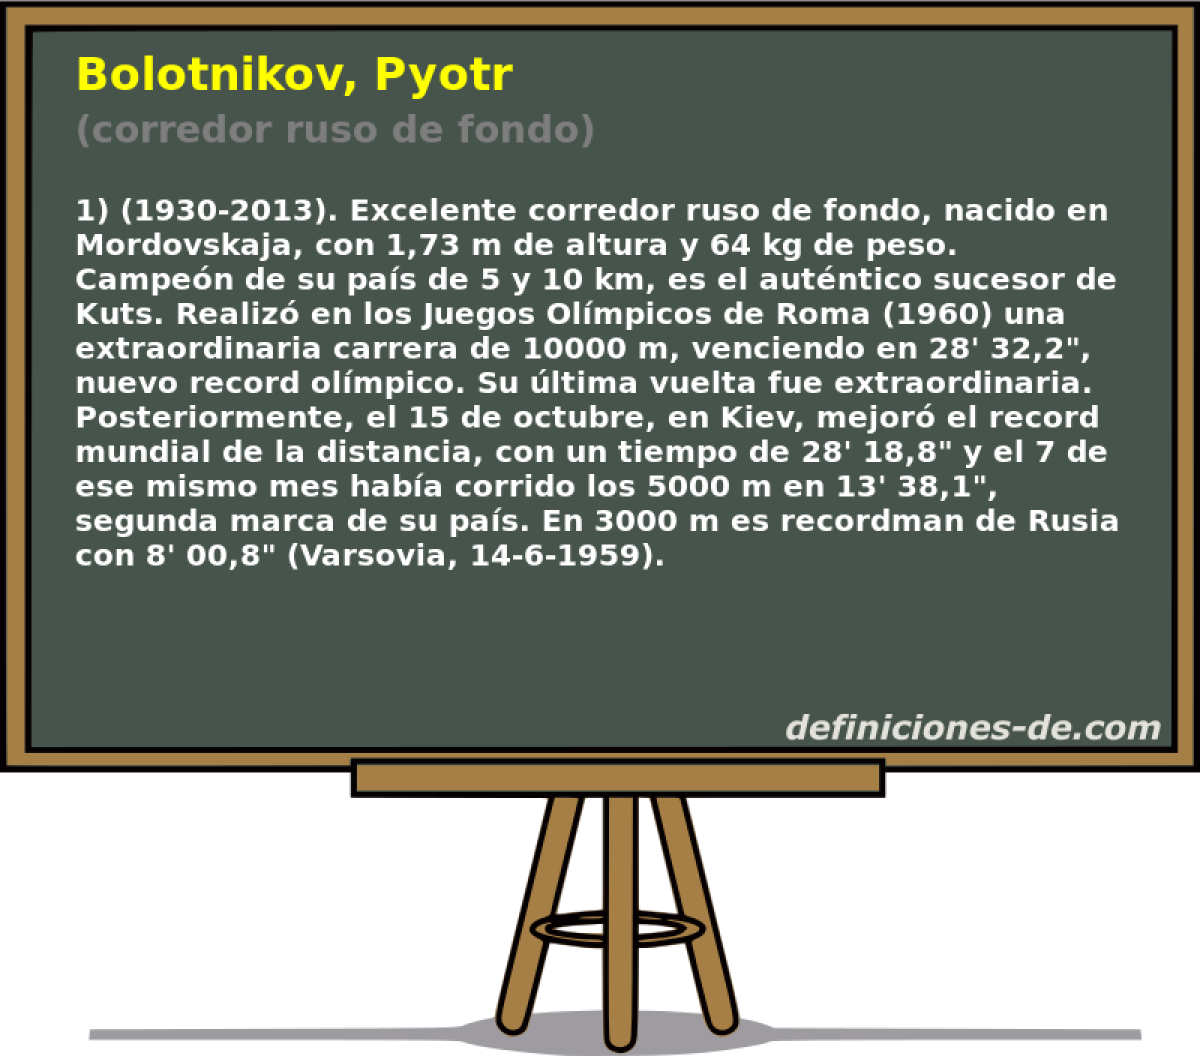 Bolotnikov, Pyotr (corredor ruso de fondo)